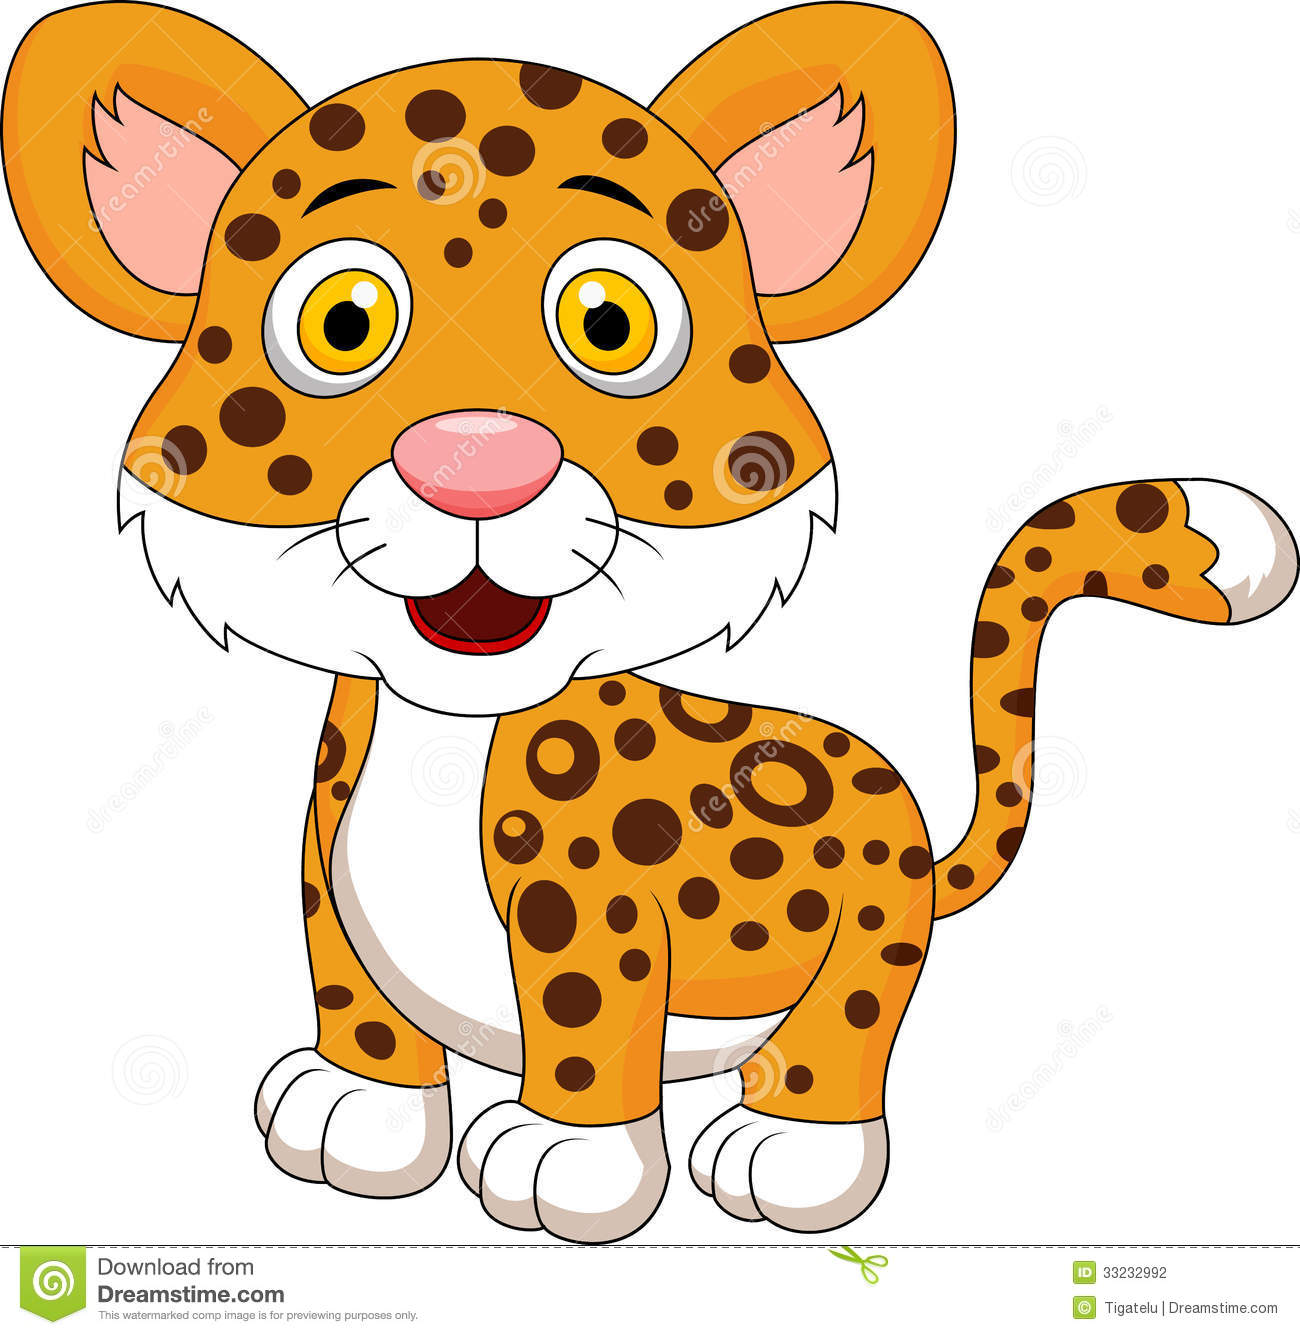 baby leopard. Size: 84 Kb